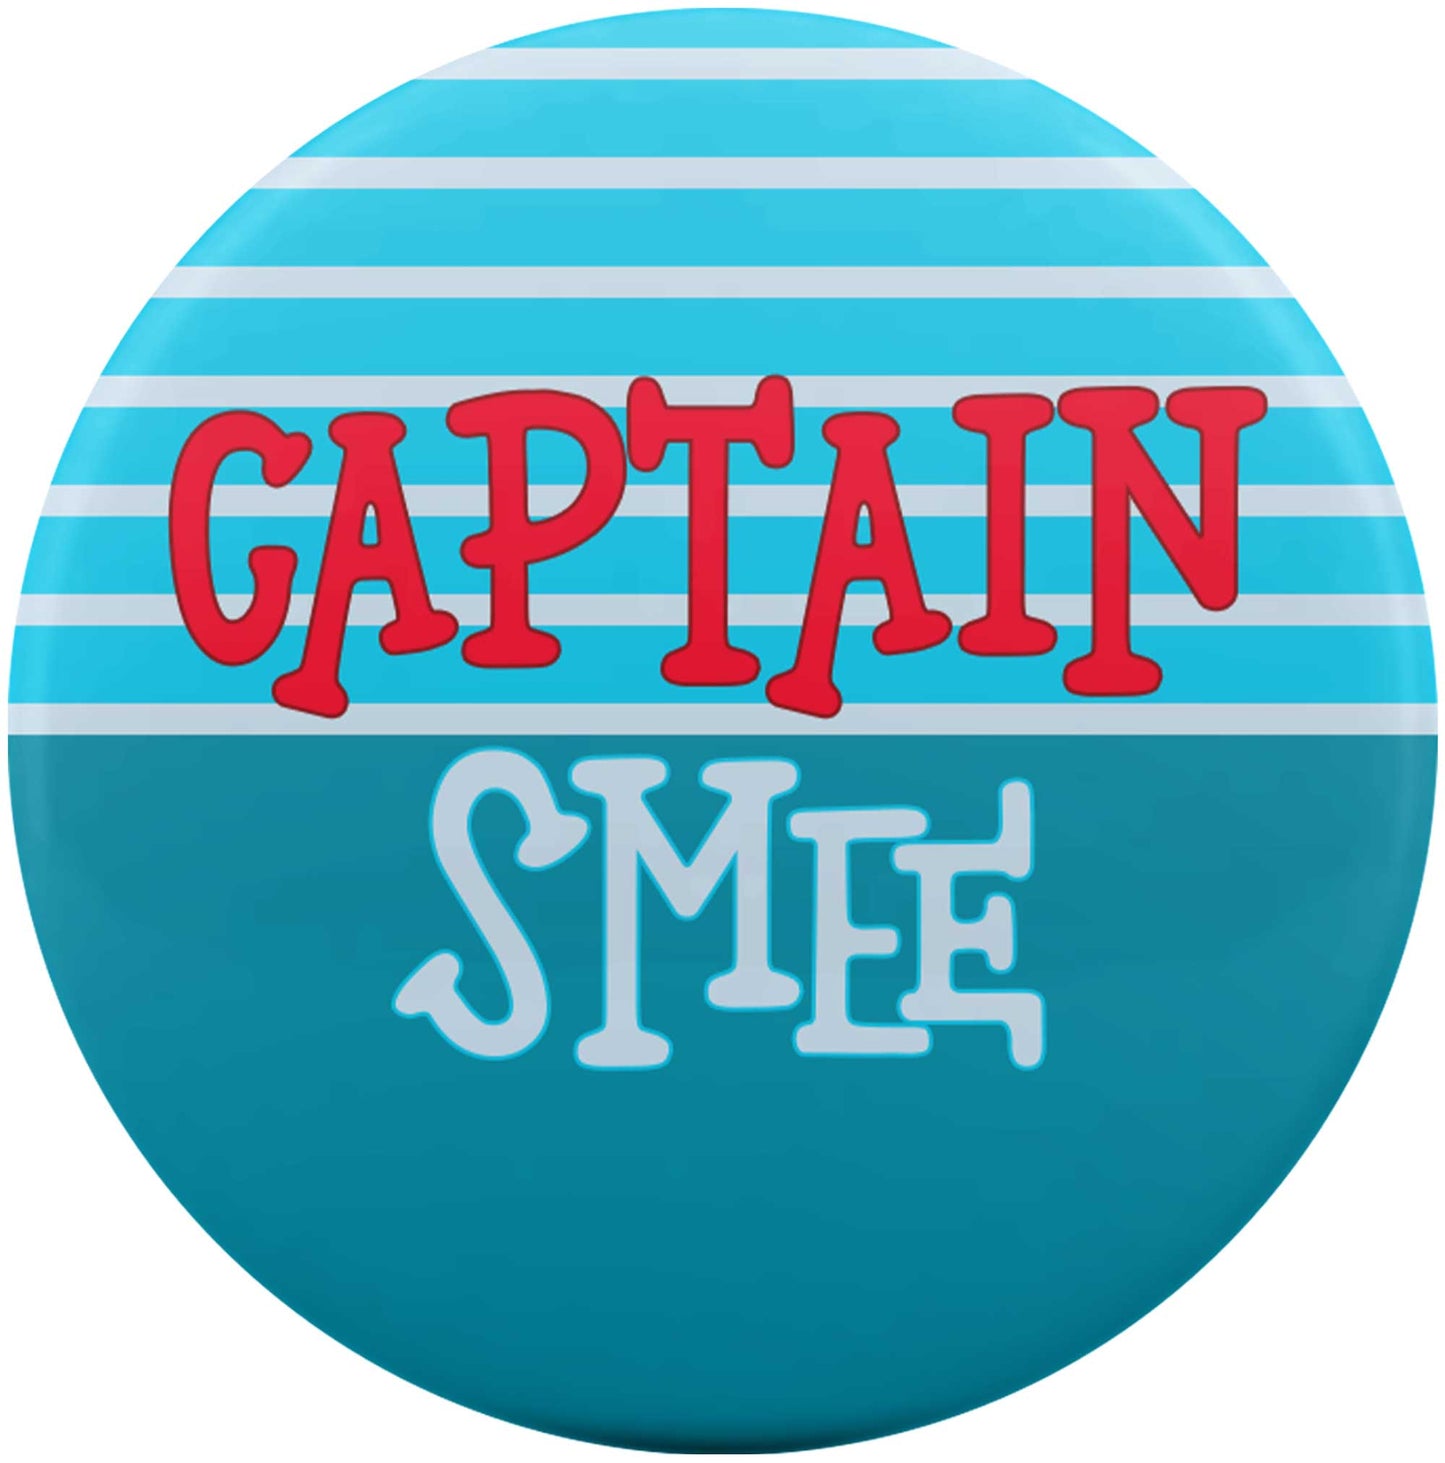 Captain Smee